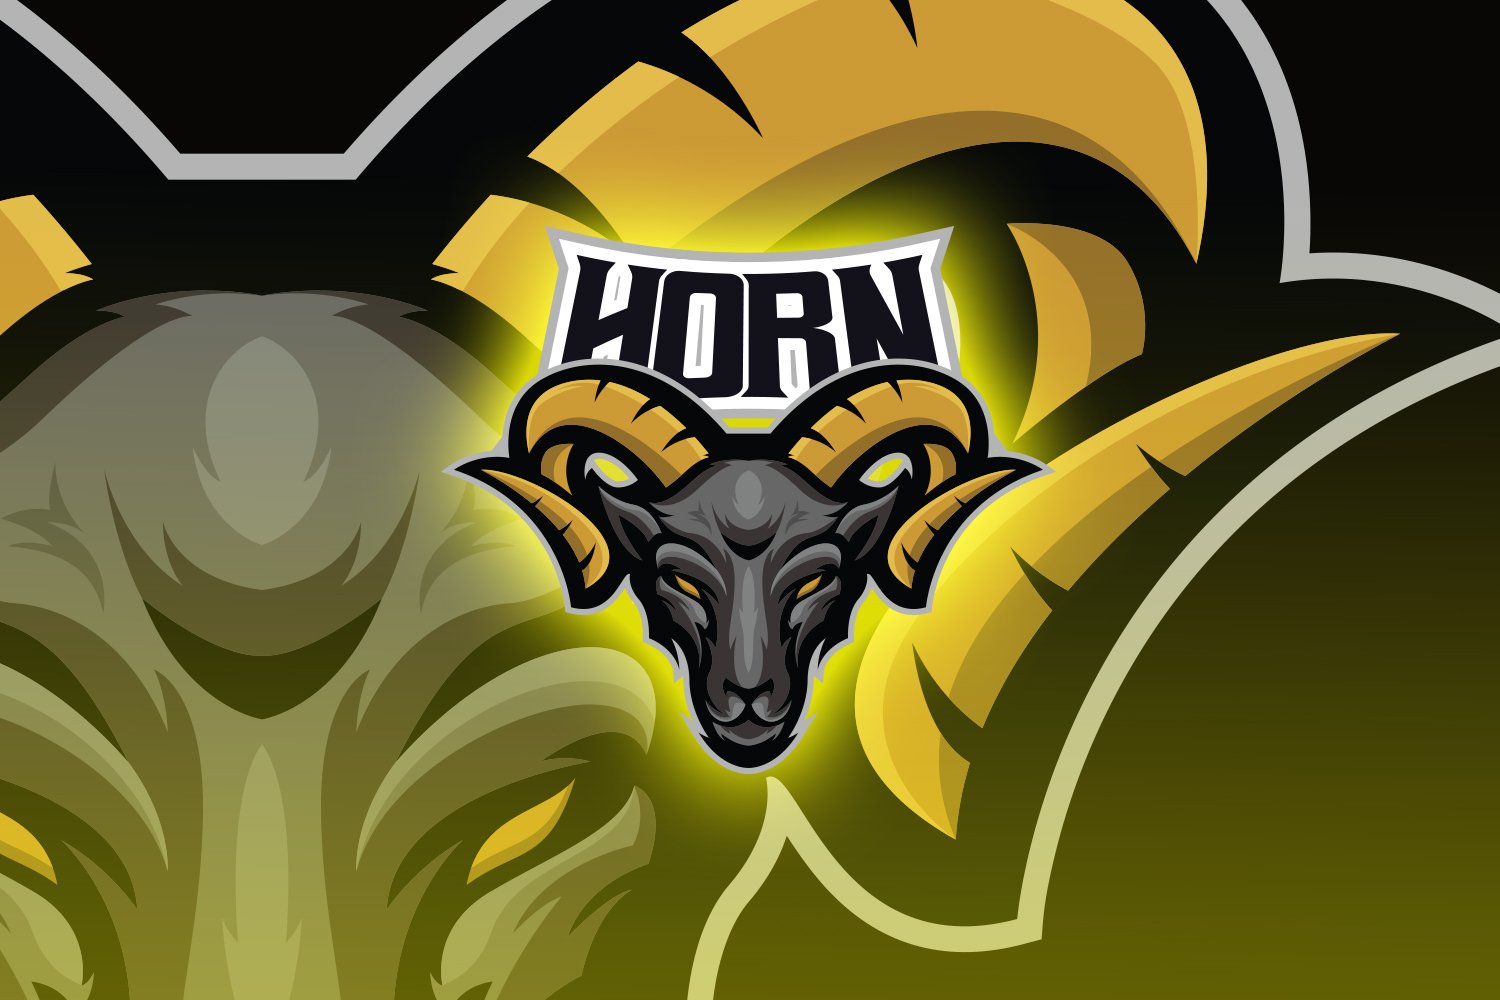 Goat Esport Logo cover image.